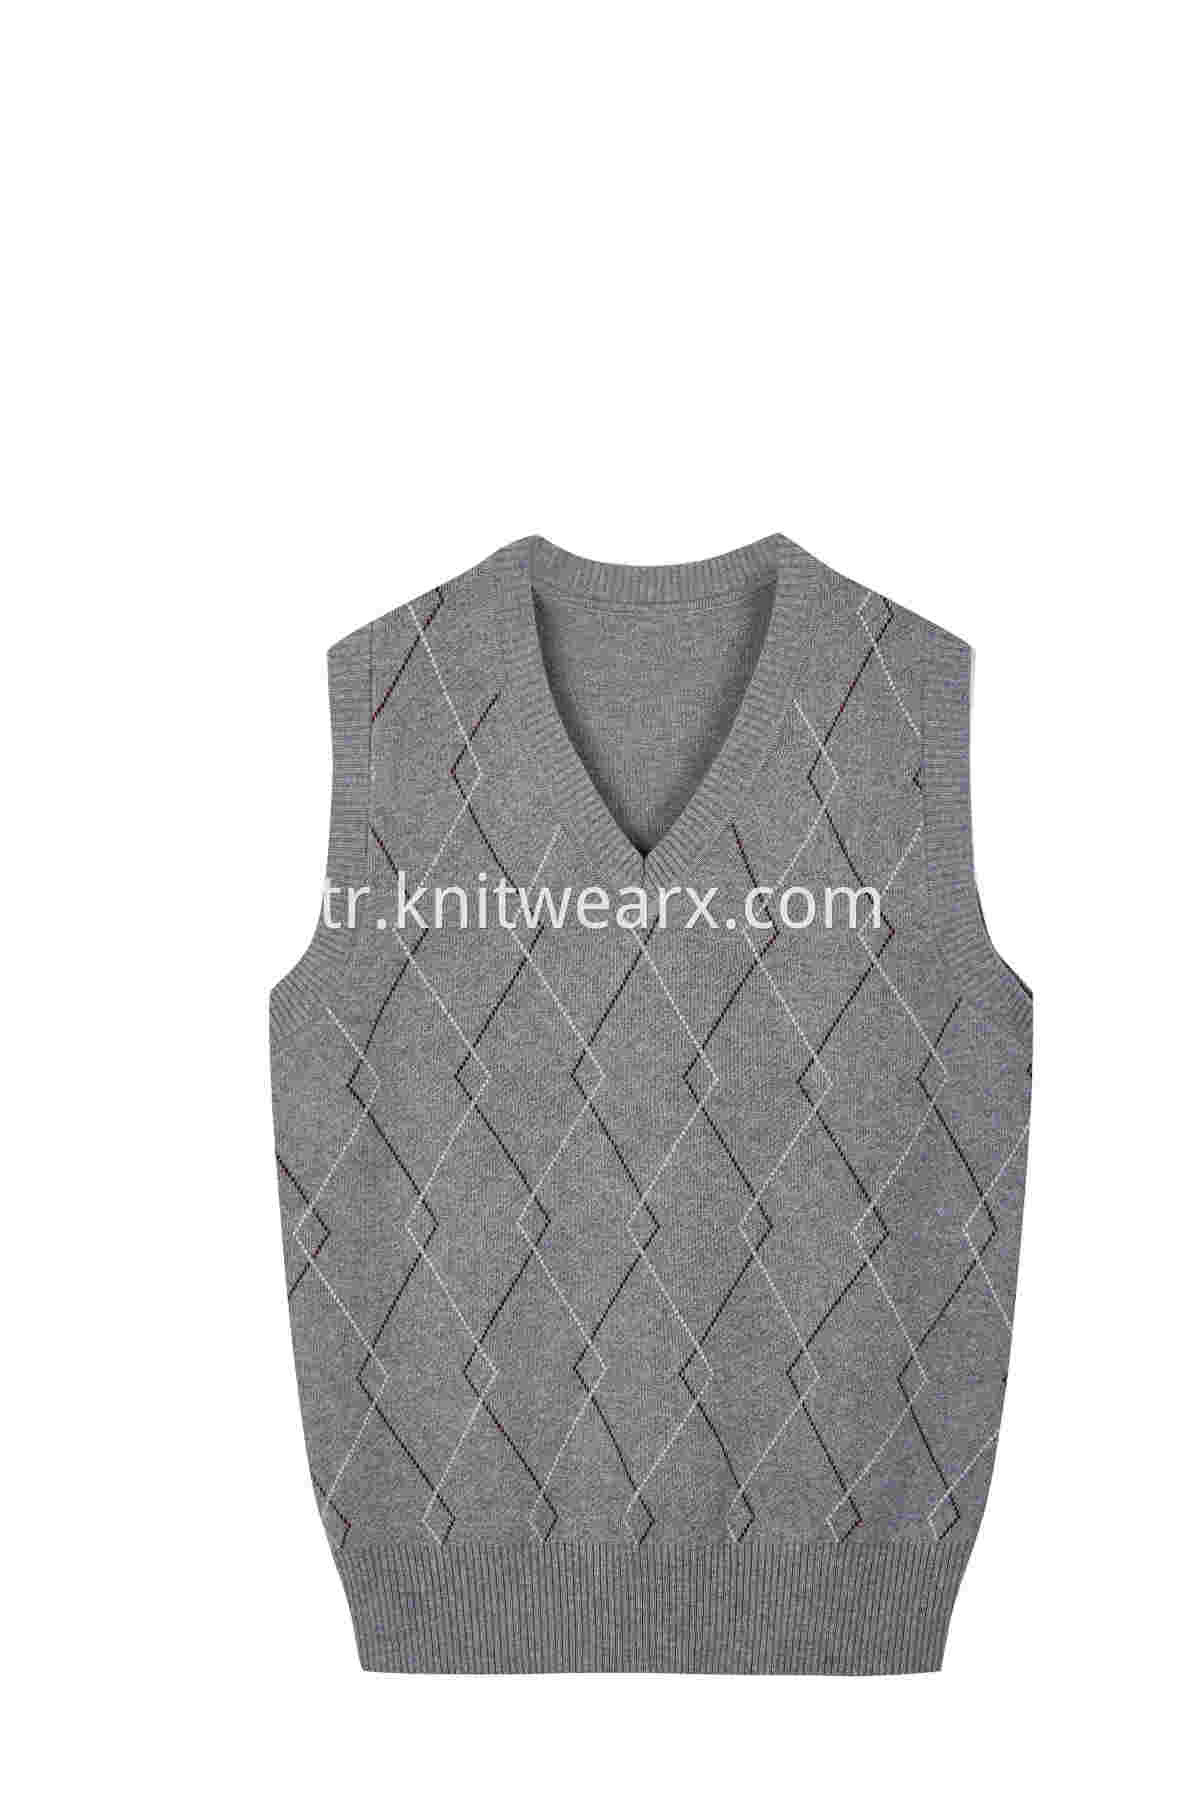 Kids's Sweater Jaquard Vest Cotton V-Neck School Uniform Pullover Sweater